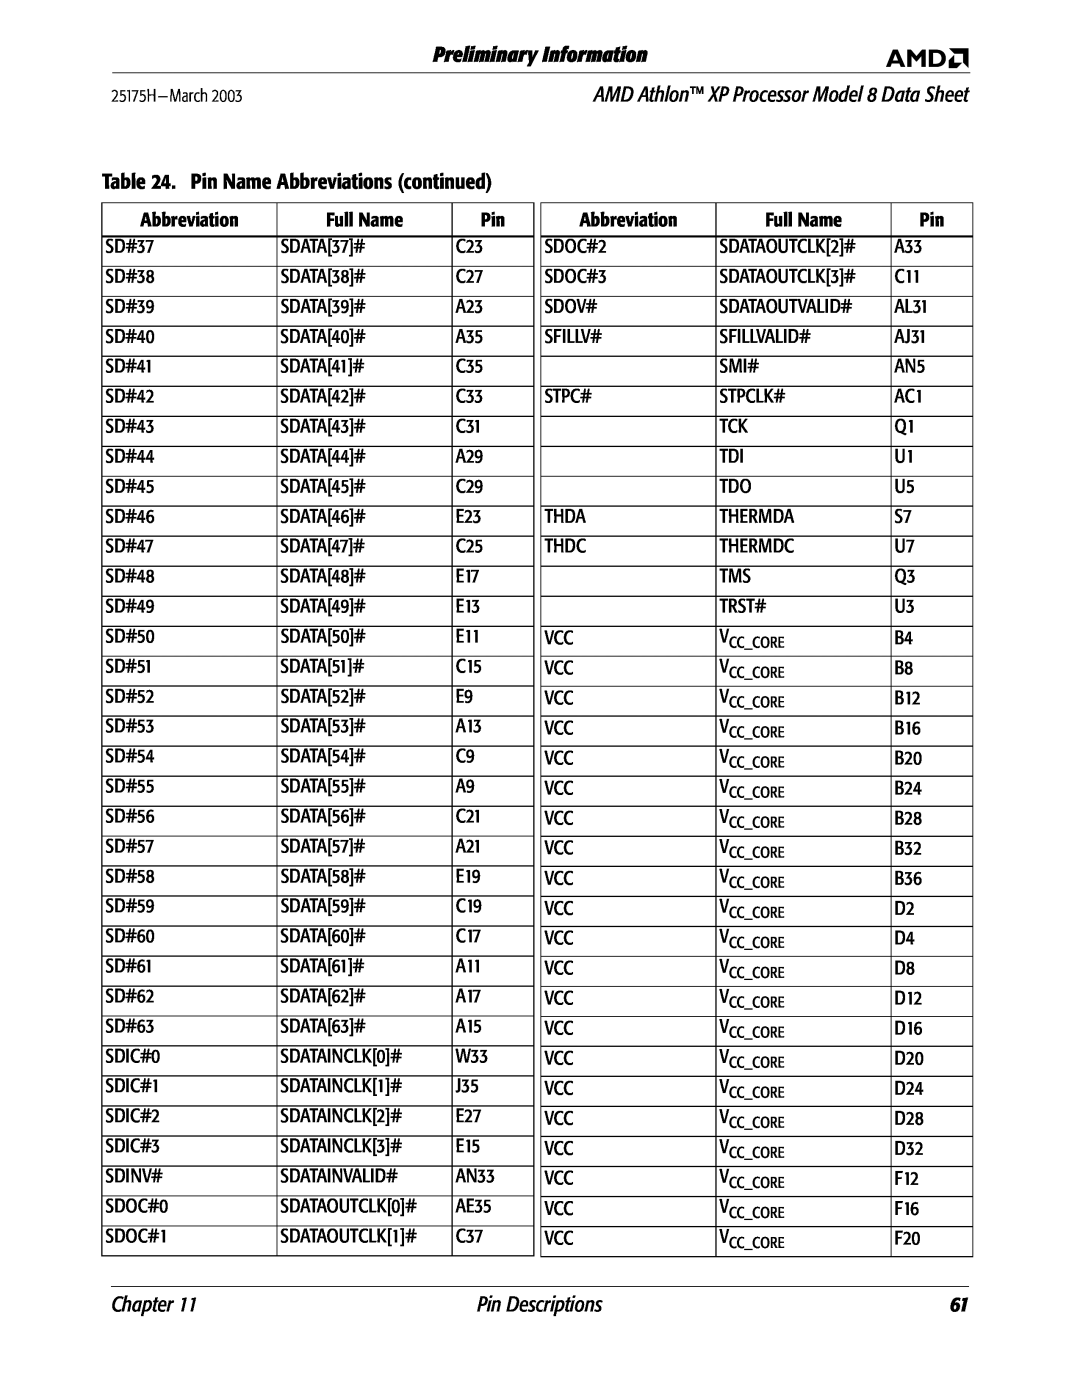 AMD 8 manual Preliminary Information, Pin Name Abbreviations continued, Chapter, Pin Descriptions 